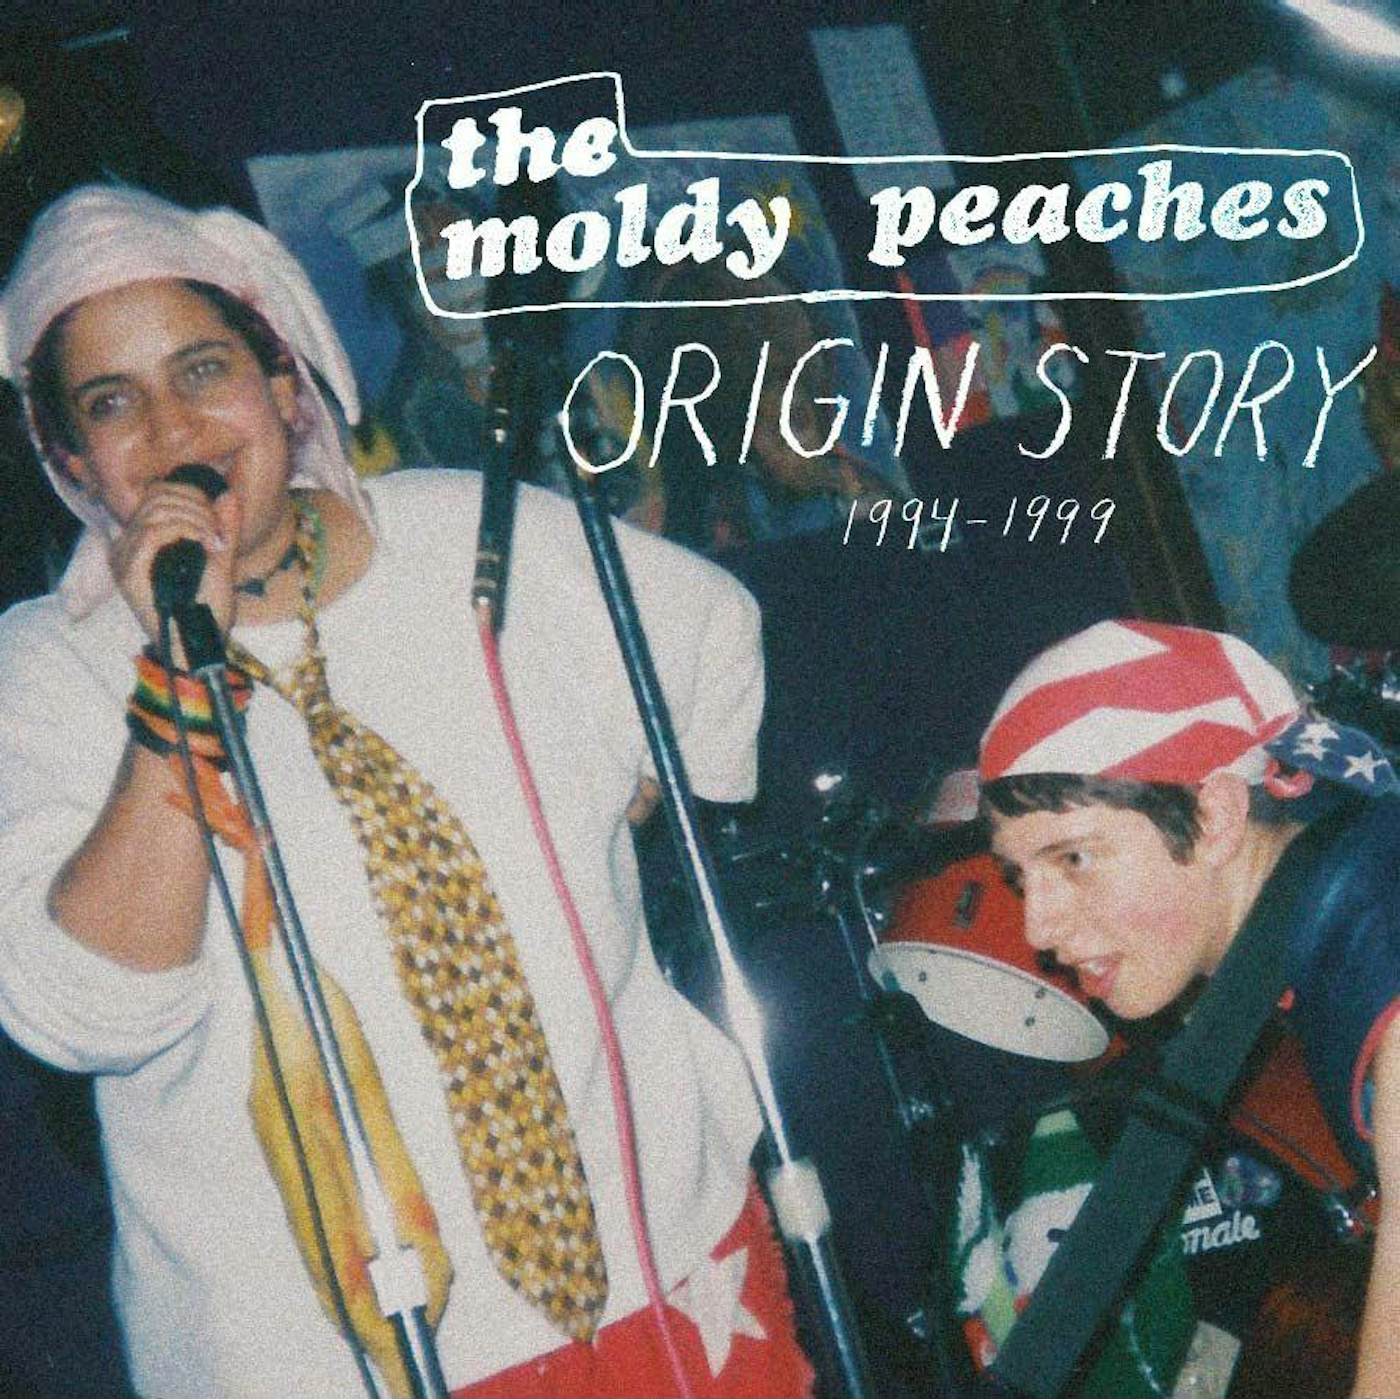 The Moldy Peaches Origin Story: 1994-1999 - Blue Vinyl Record